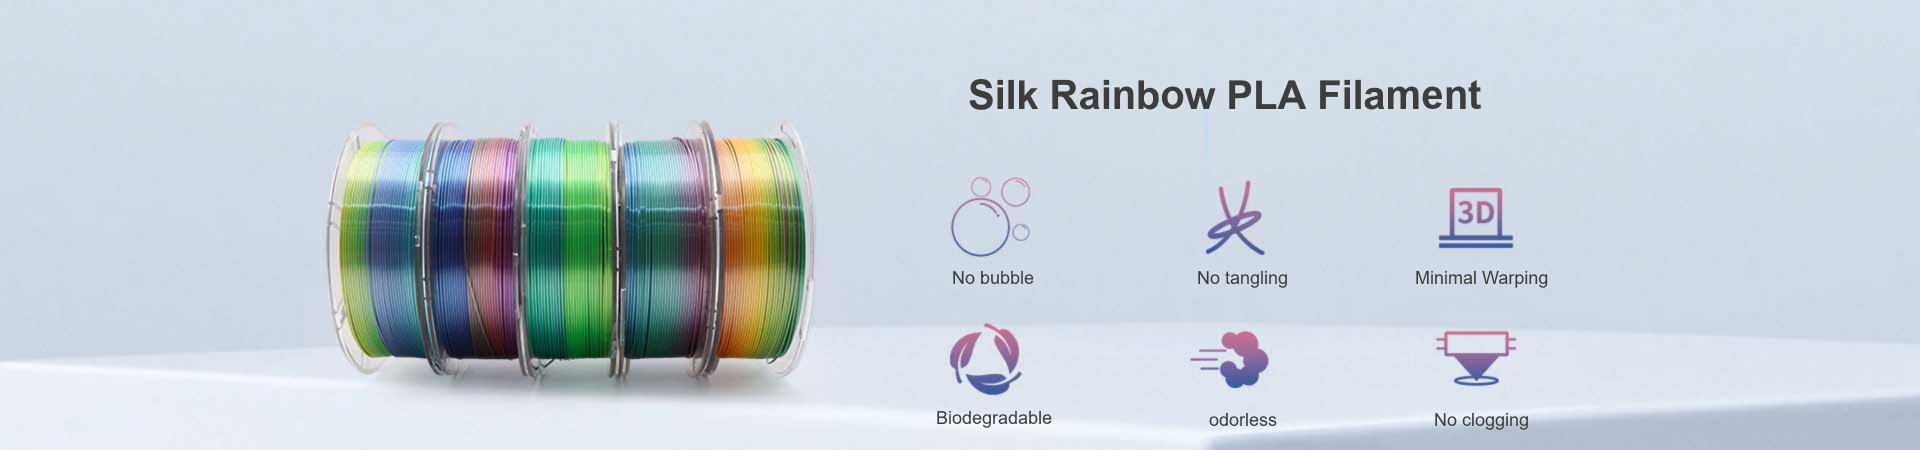 Silk Rainbow PLA Filament